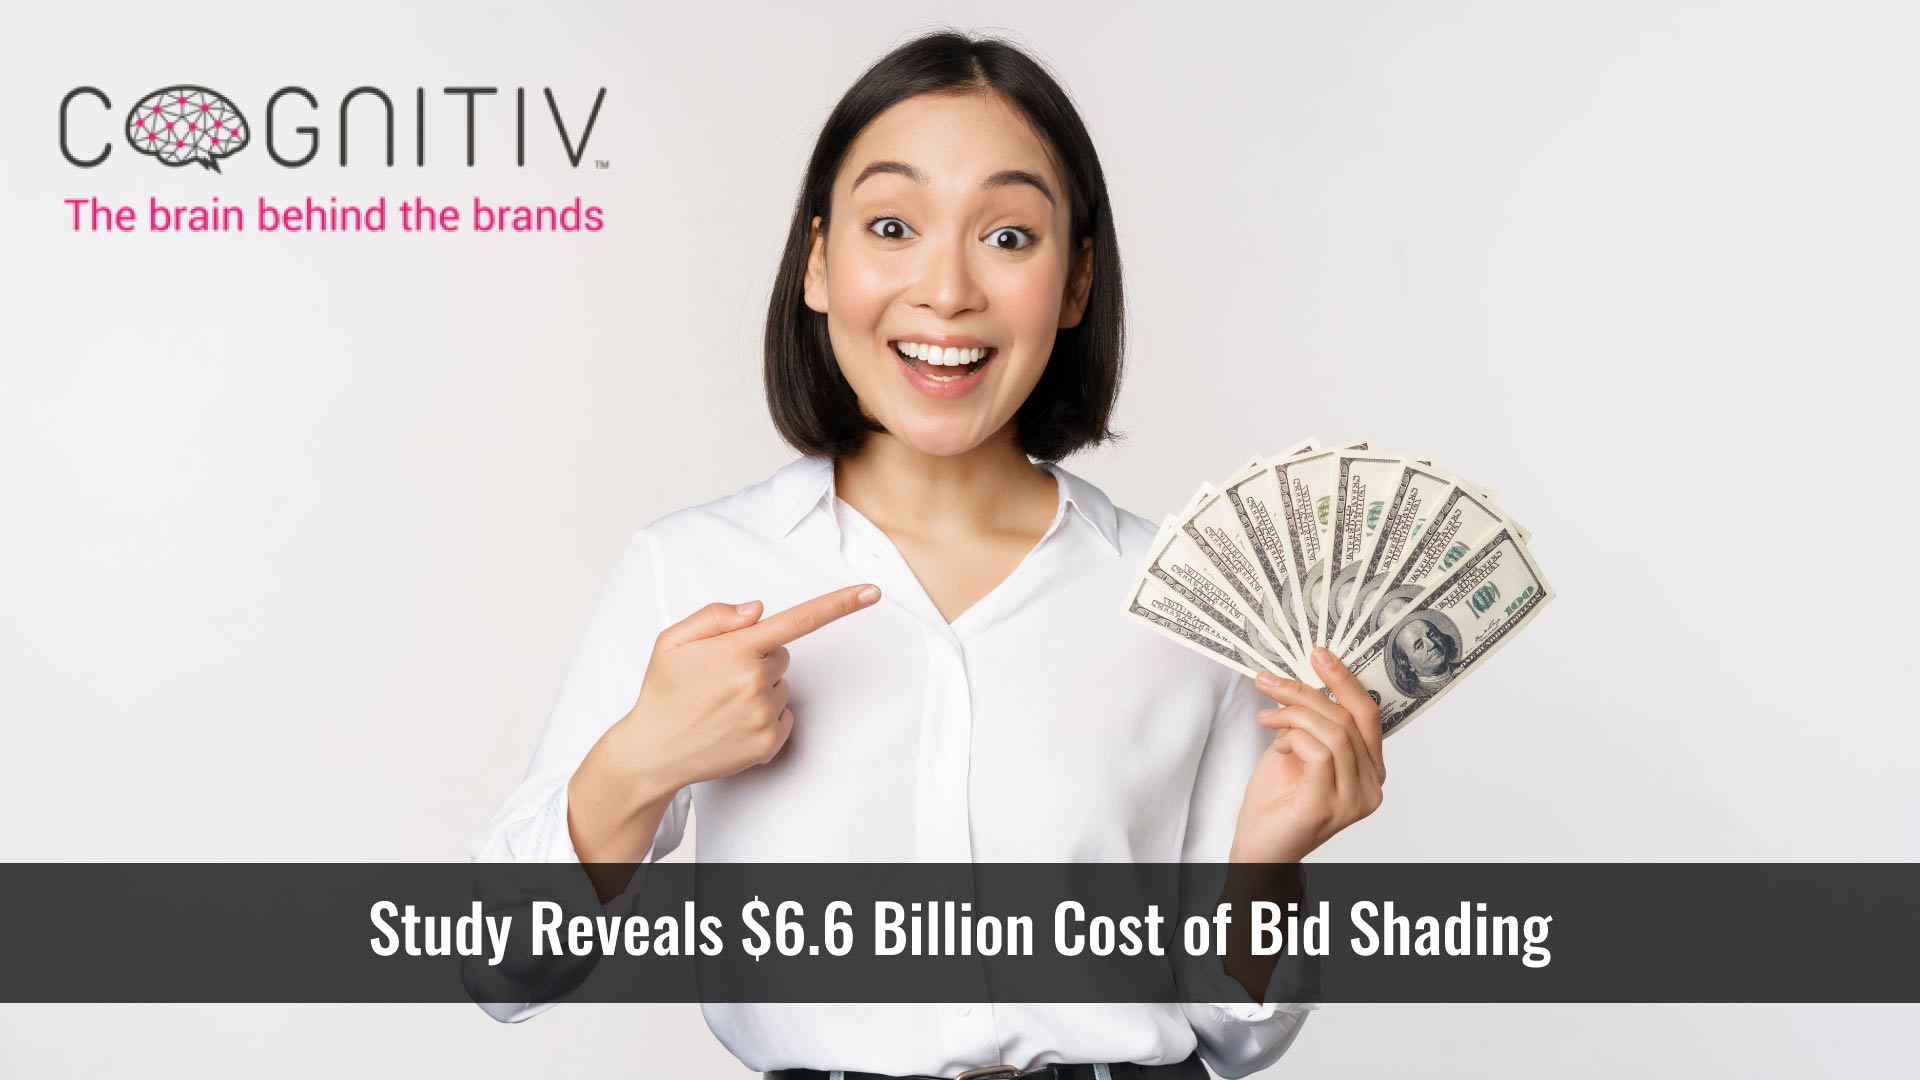 New Programmatic Advertising Study Reveals $6.6 Billion Cost of Bid Shading